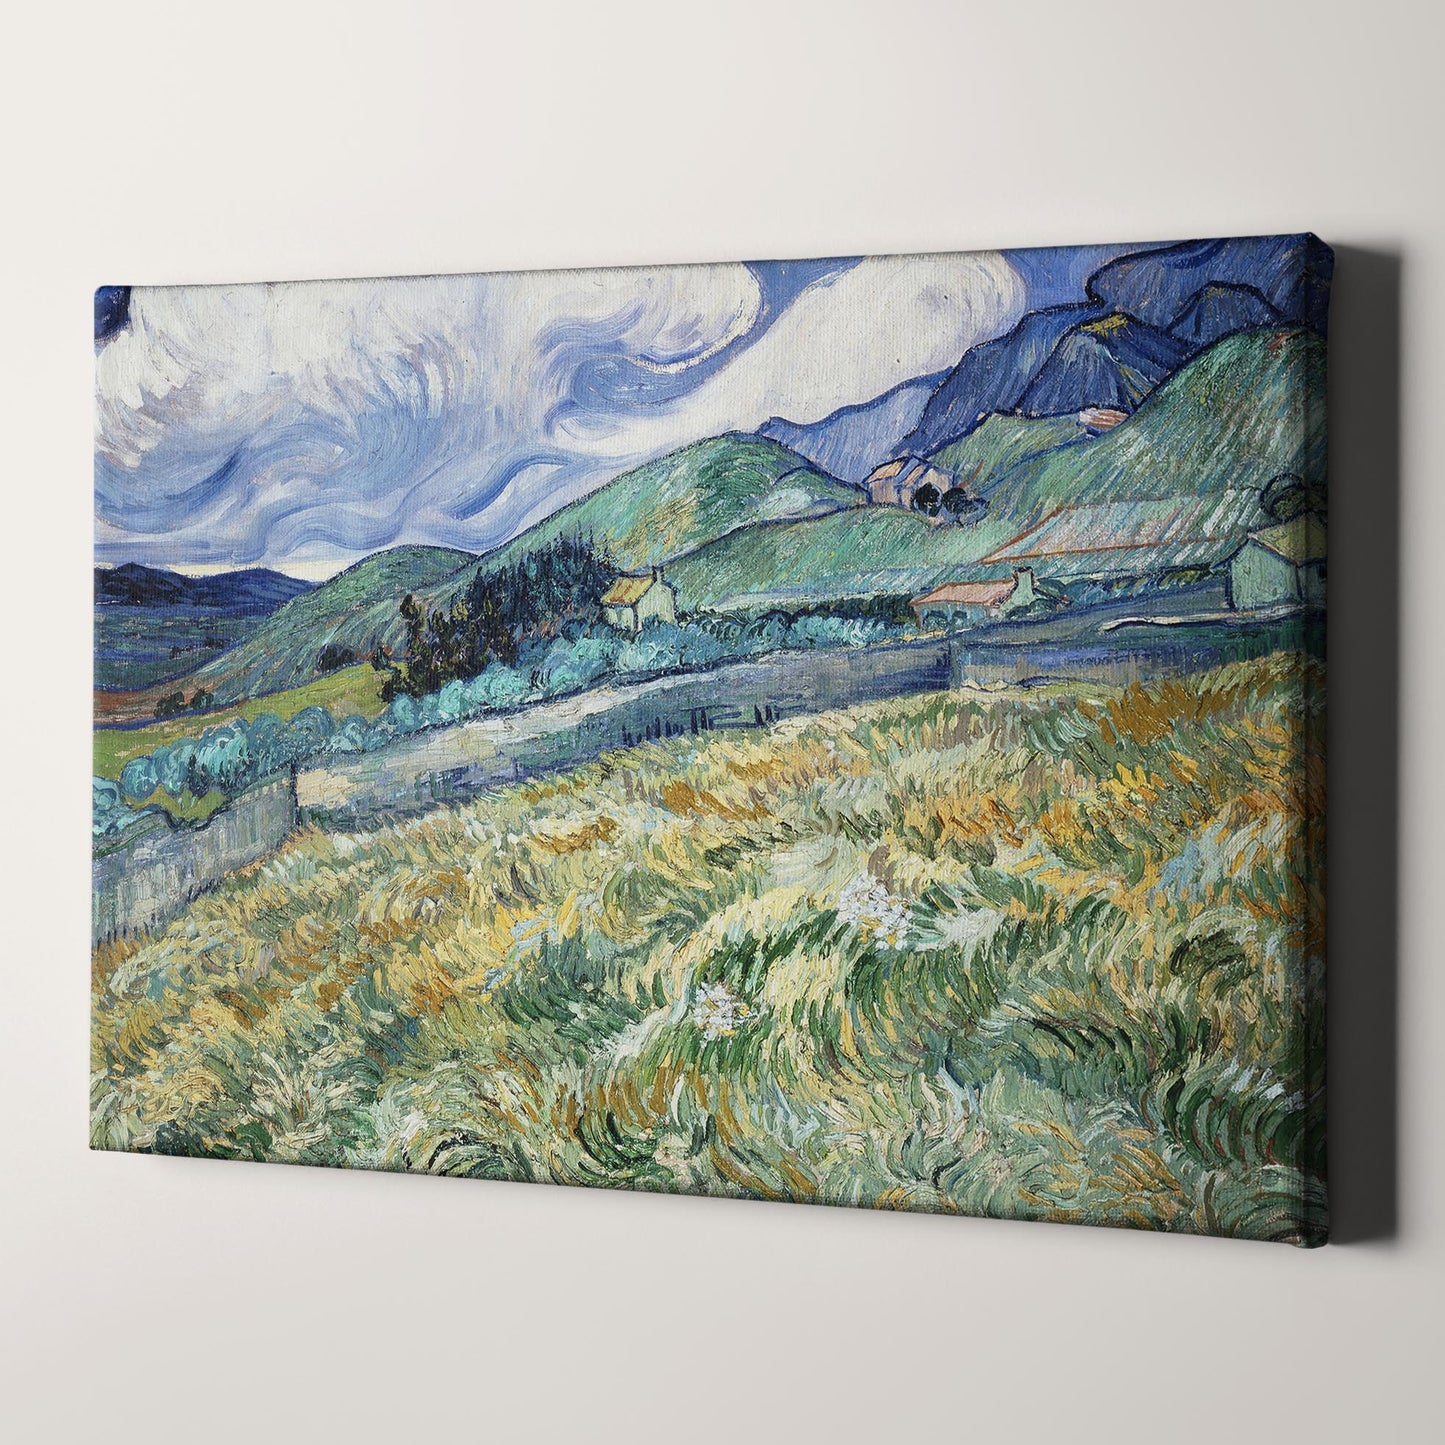 Landscape from Saint-Rémy (1889) by Van Gogh